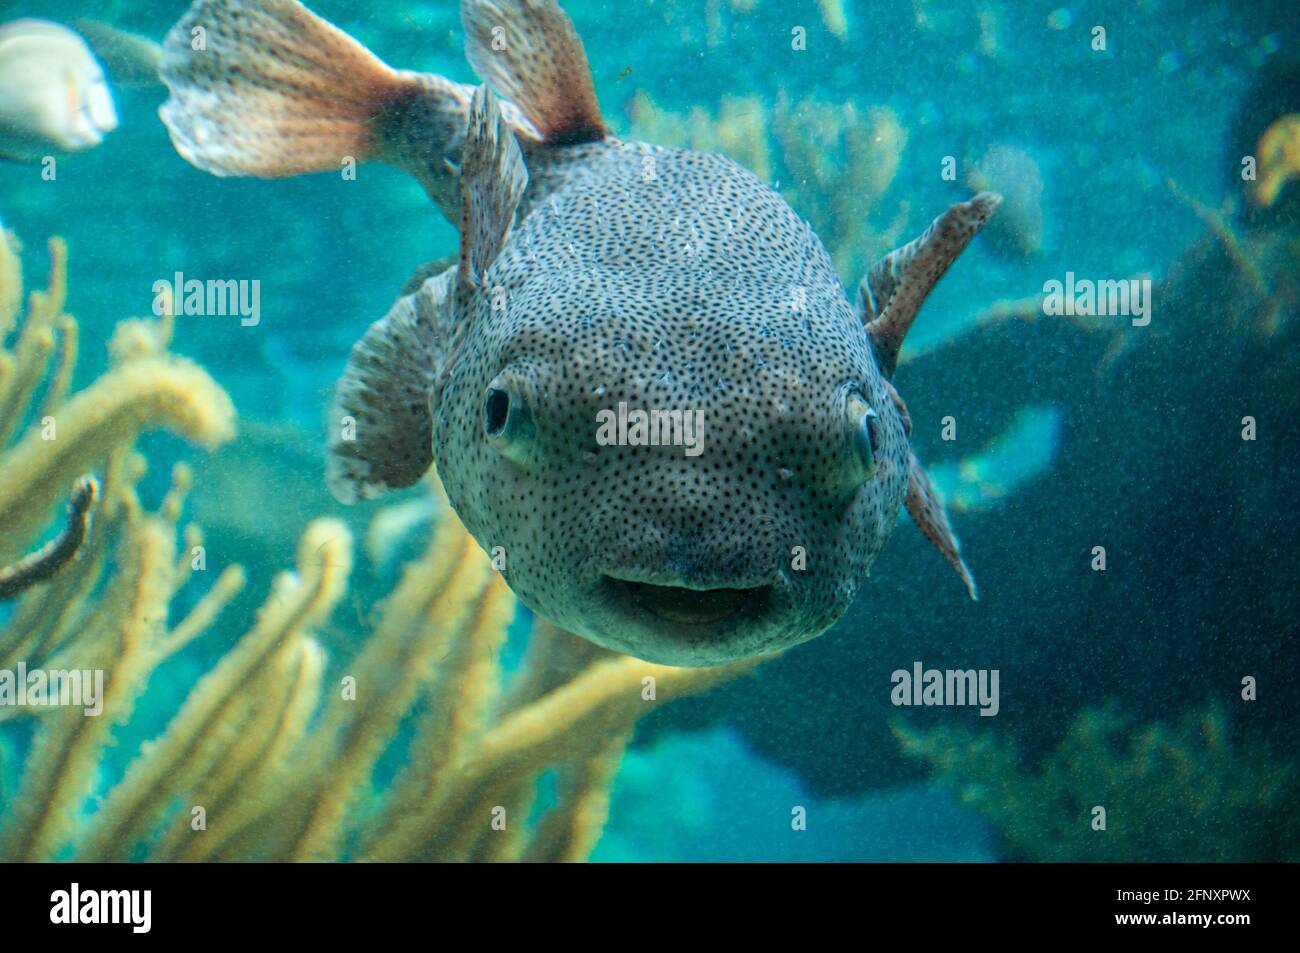 Poisonous fish Tetraodontidae blowfish Stock Photo